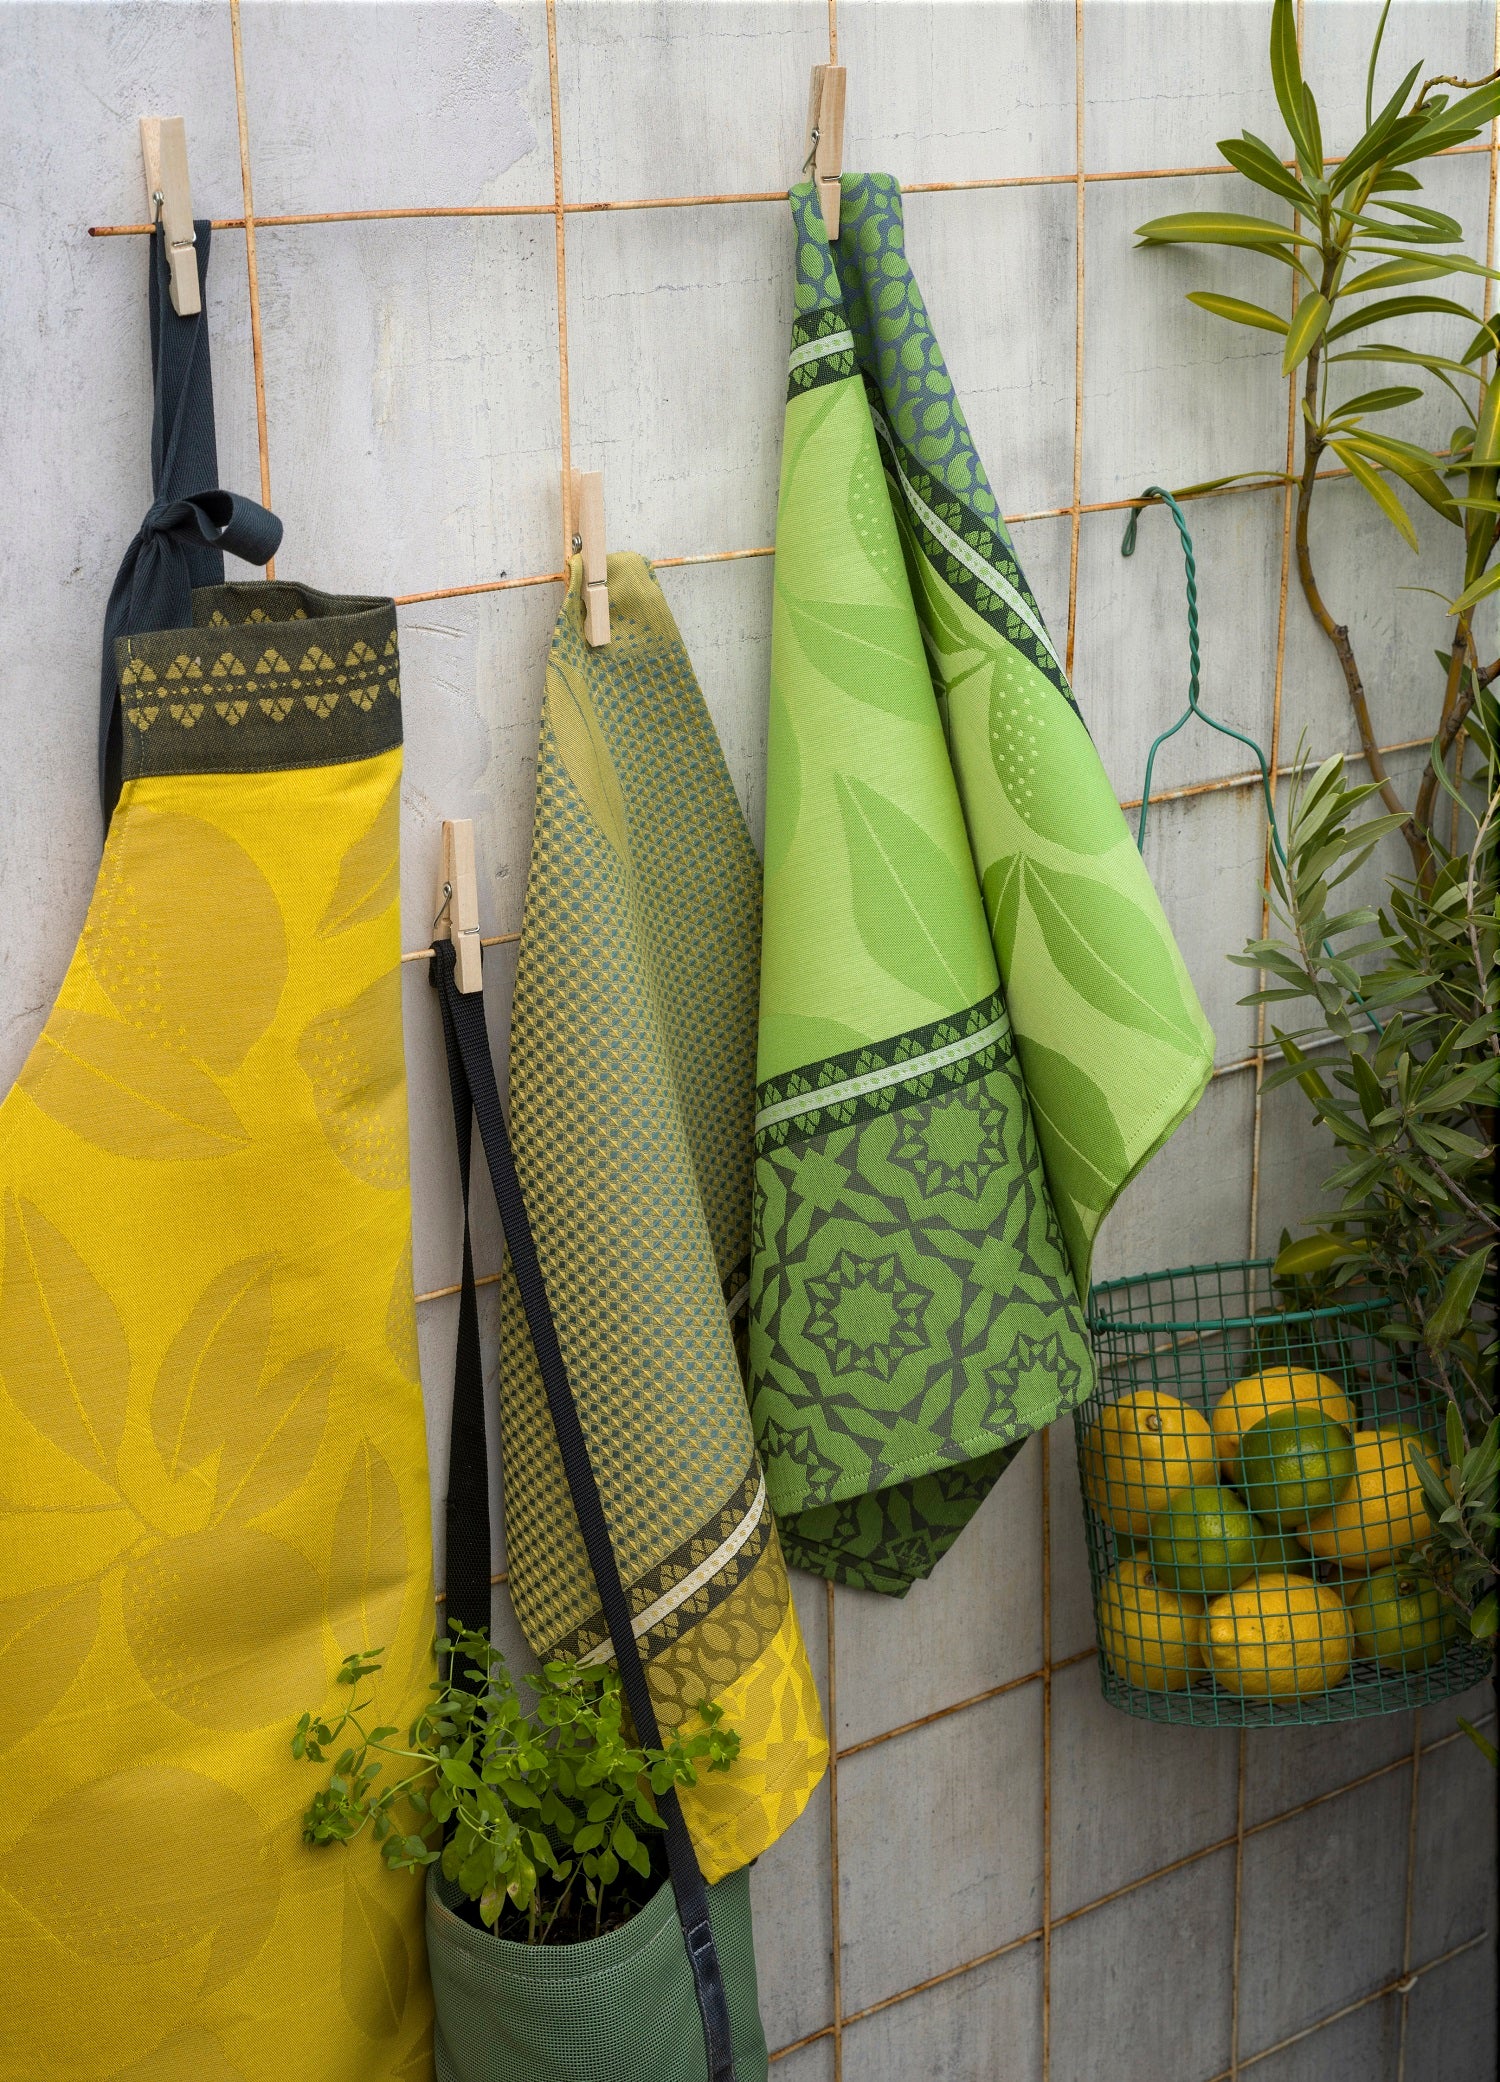 Jacquard Francais "Sous les Citronniers" (Green), Woven cotton tea towel. Made in France.